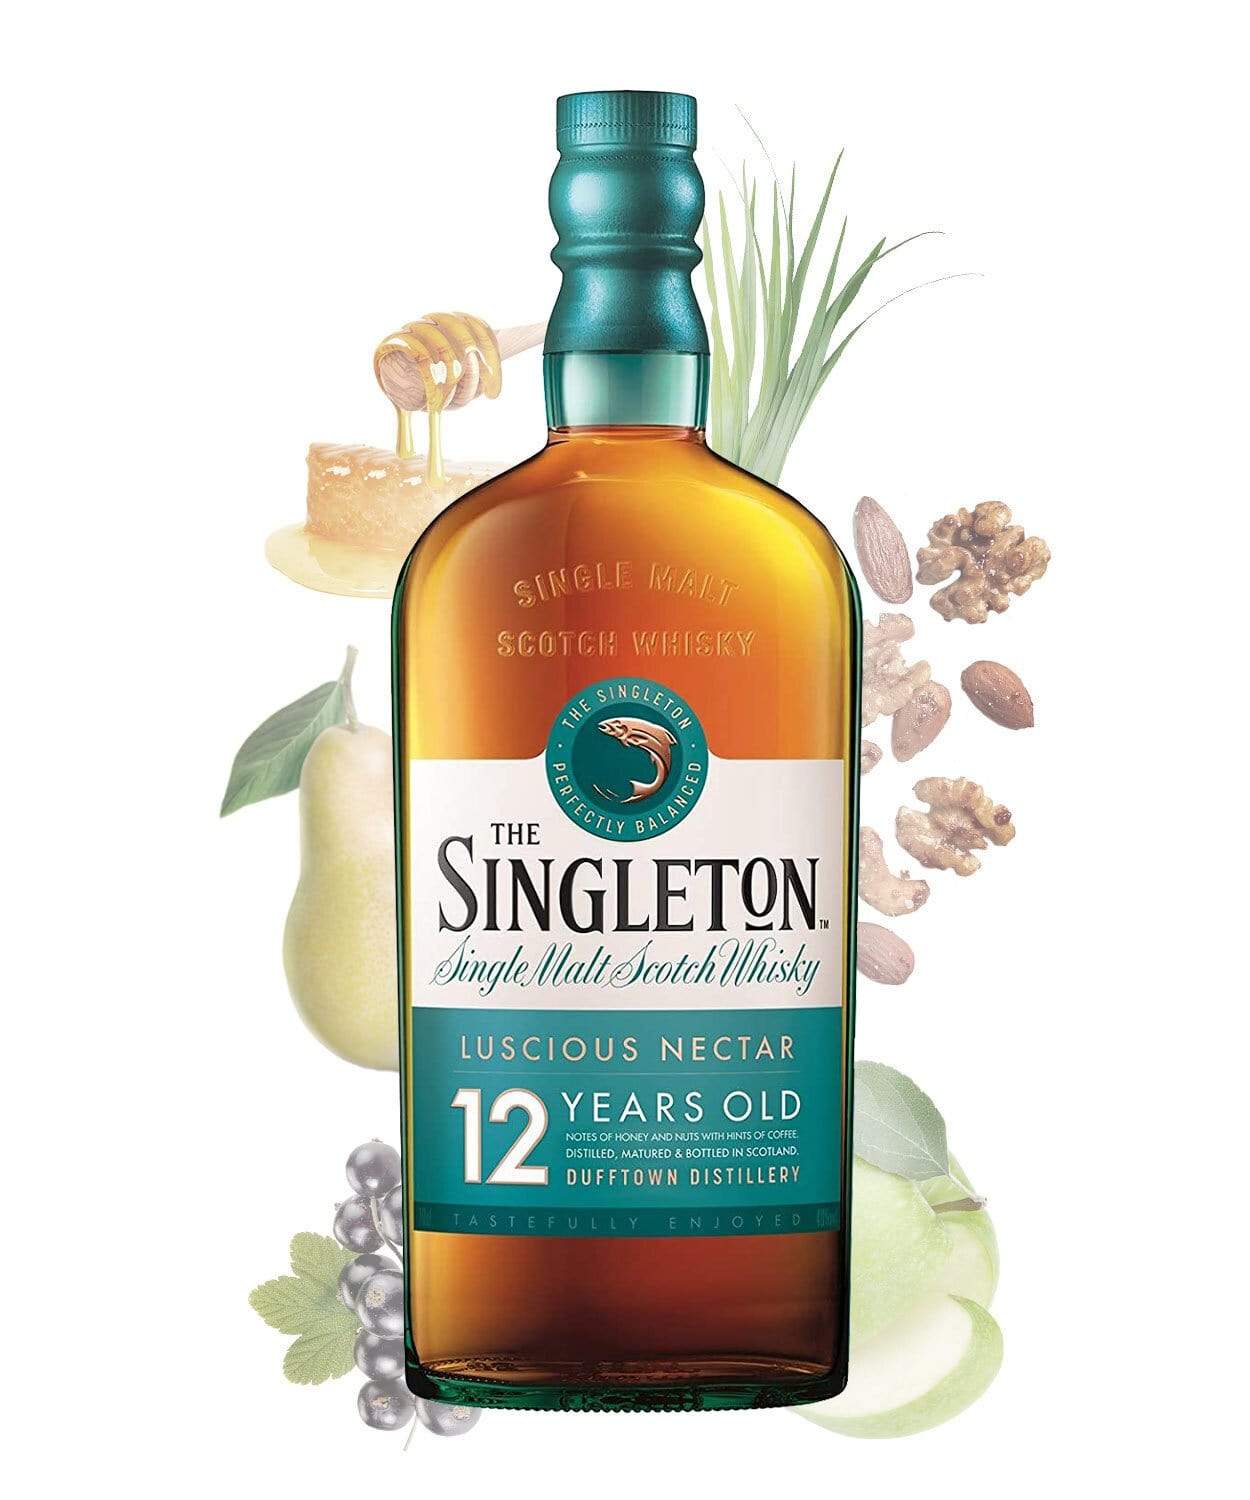 Синглтон 0.7. Синглтон 12. Singleton Malt Scotch Whisky. Виски Синглтон 12. Виски Синглтон 12 luscious Nectar.